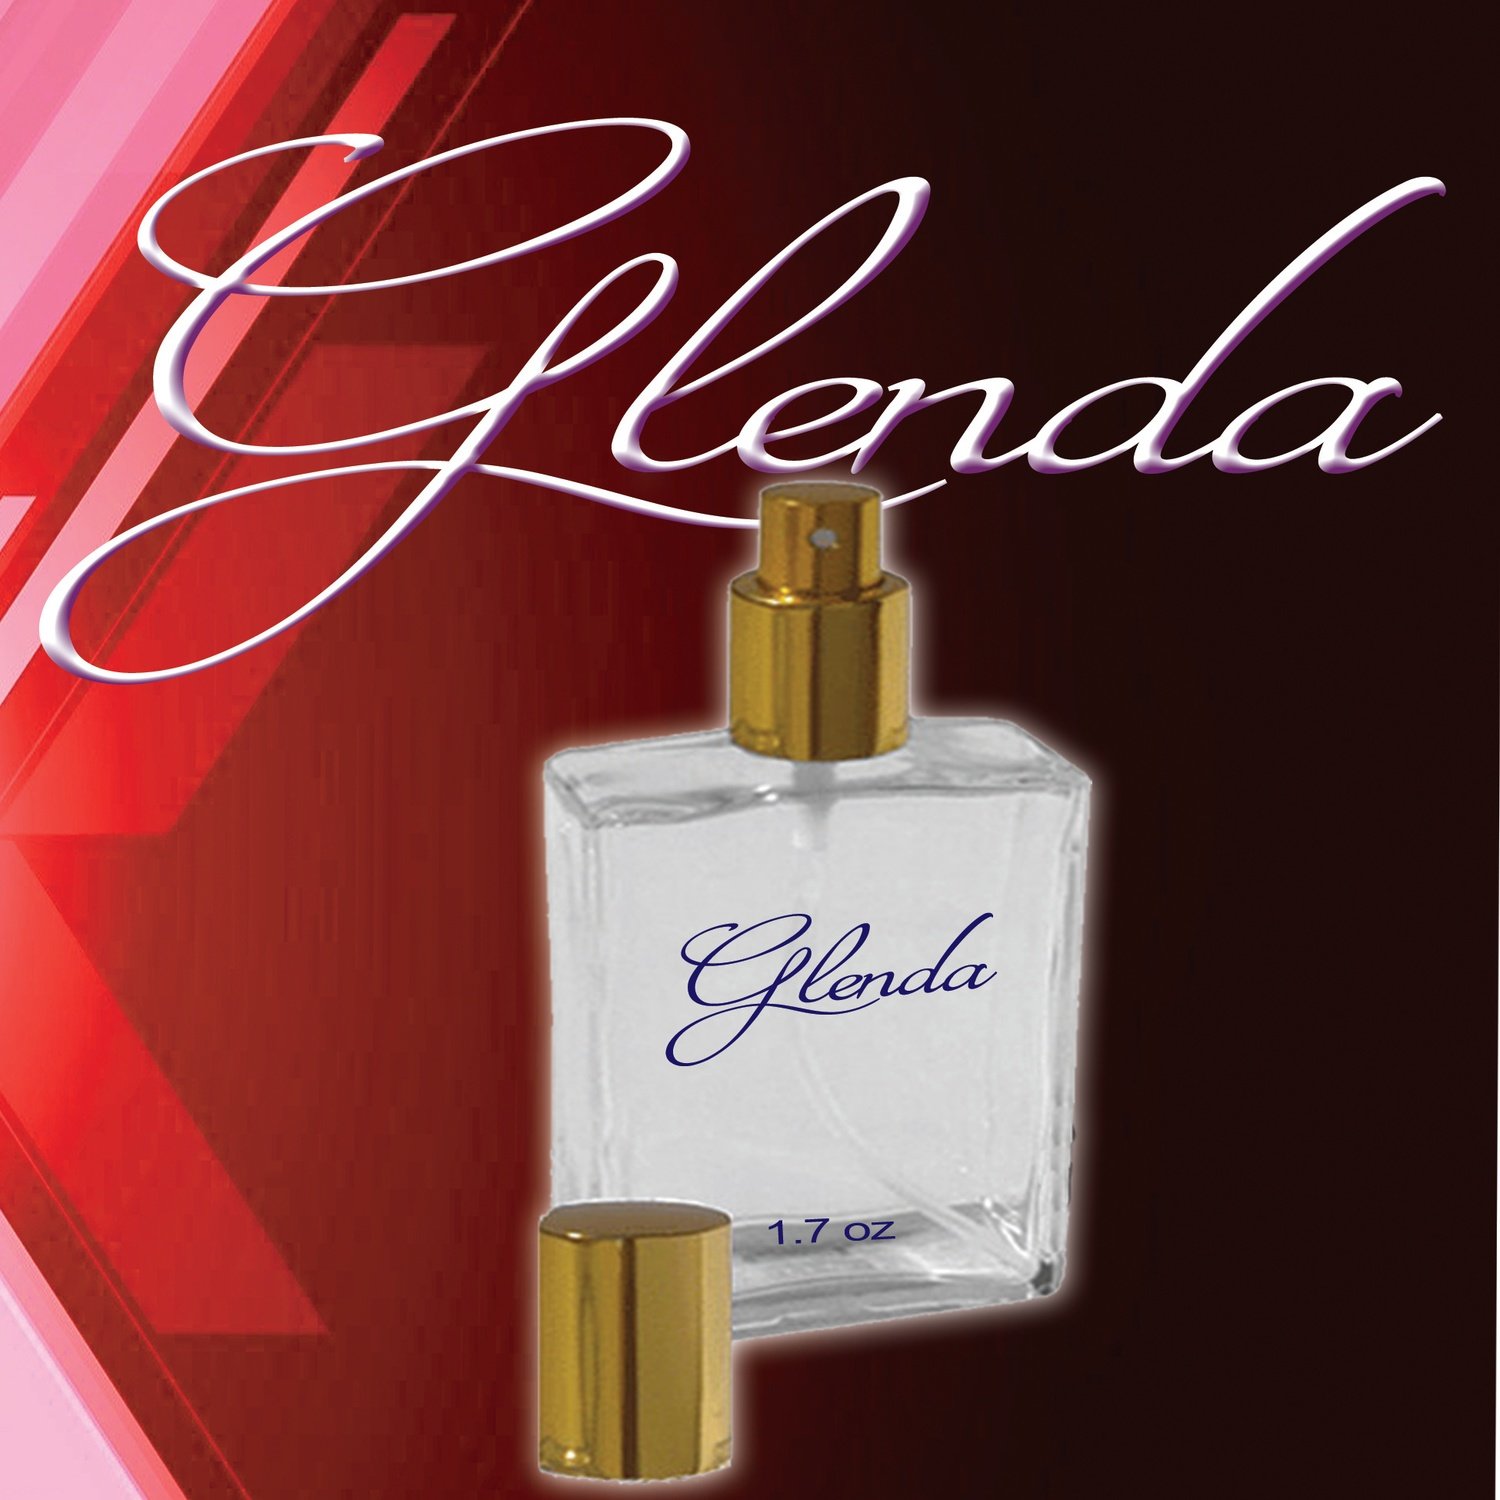 Glenda (Perfume)